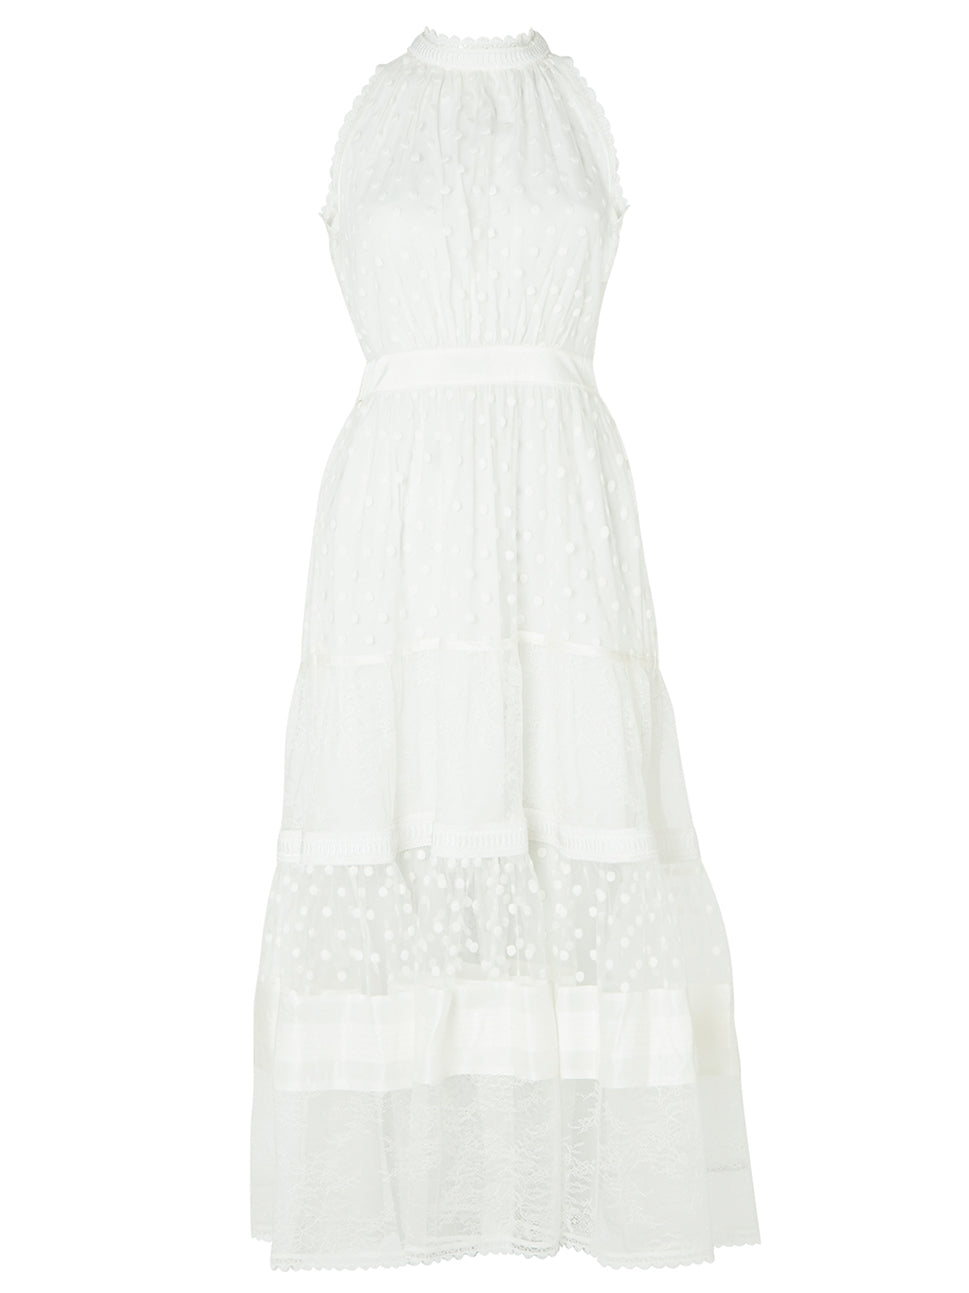 Temperley London Marlow Halter Dress White 23SMRW54424